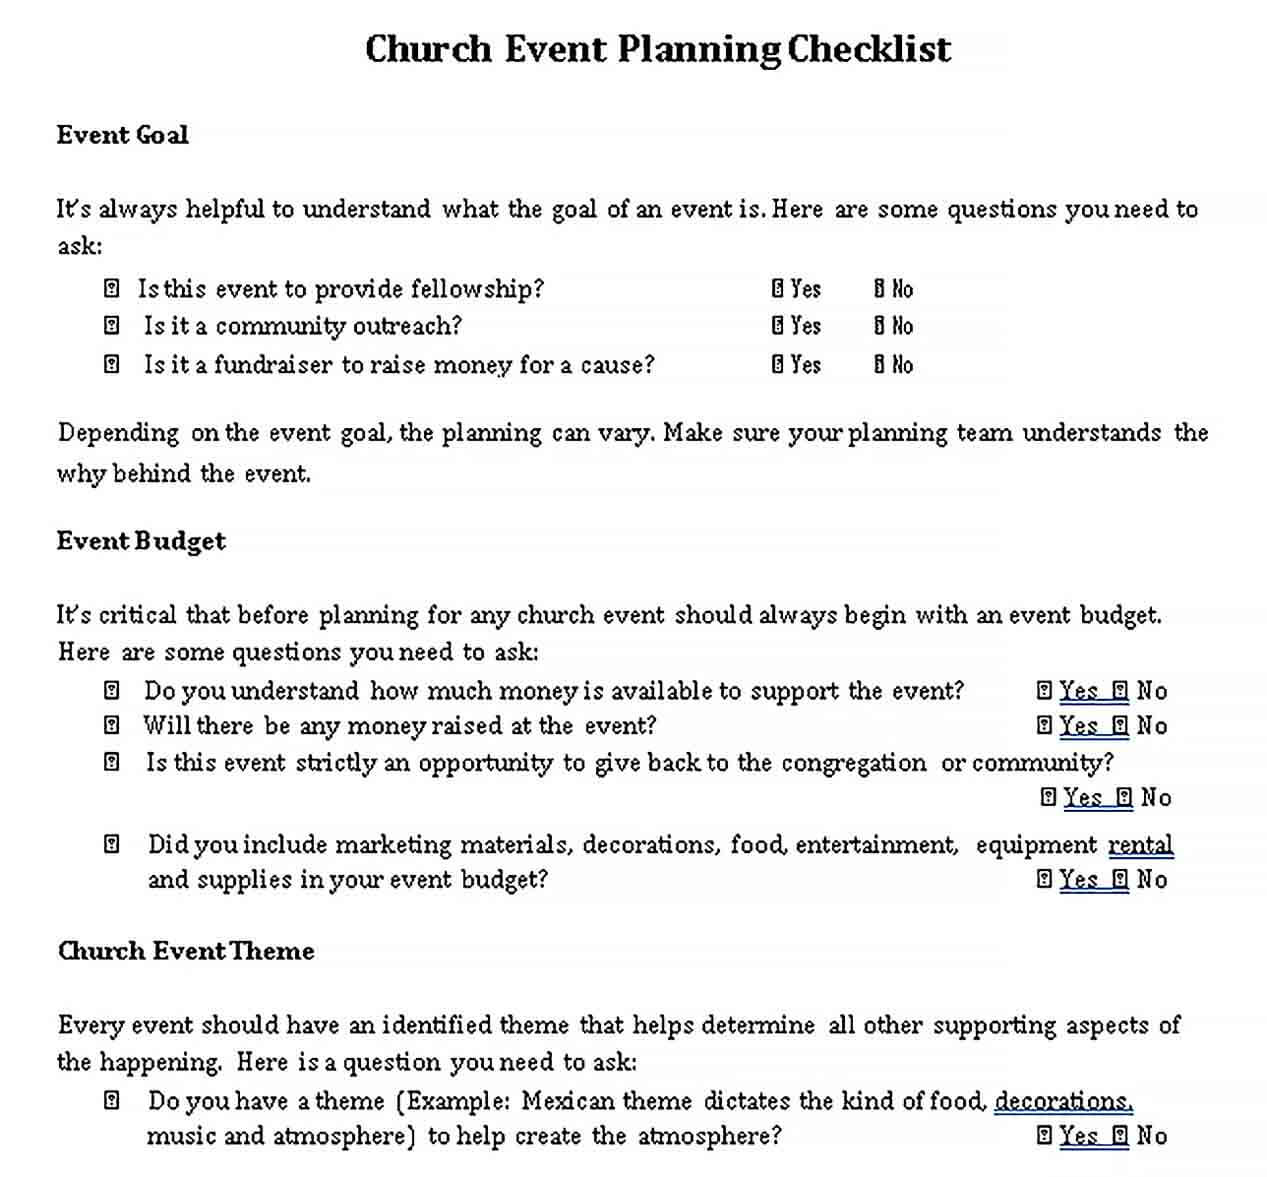 Sample Church Event Planning Checklist